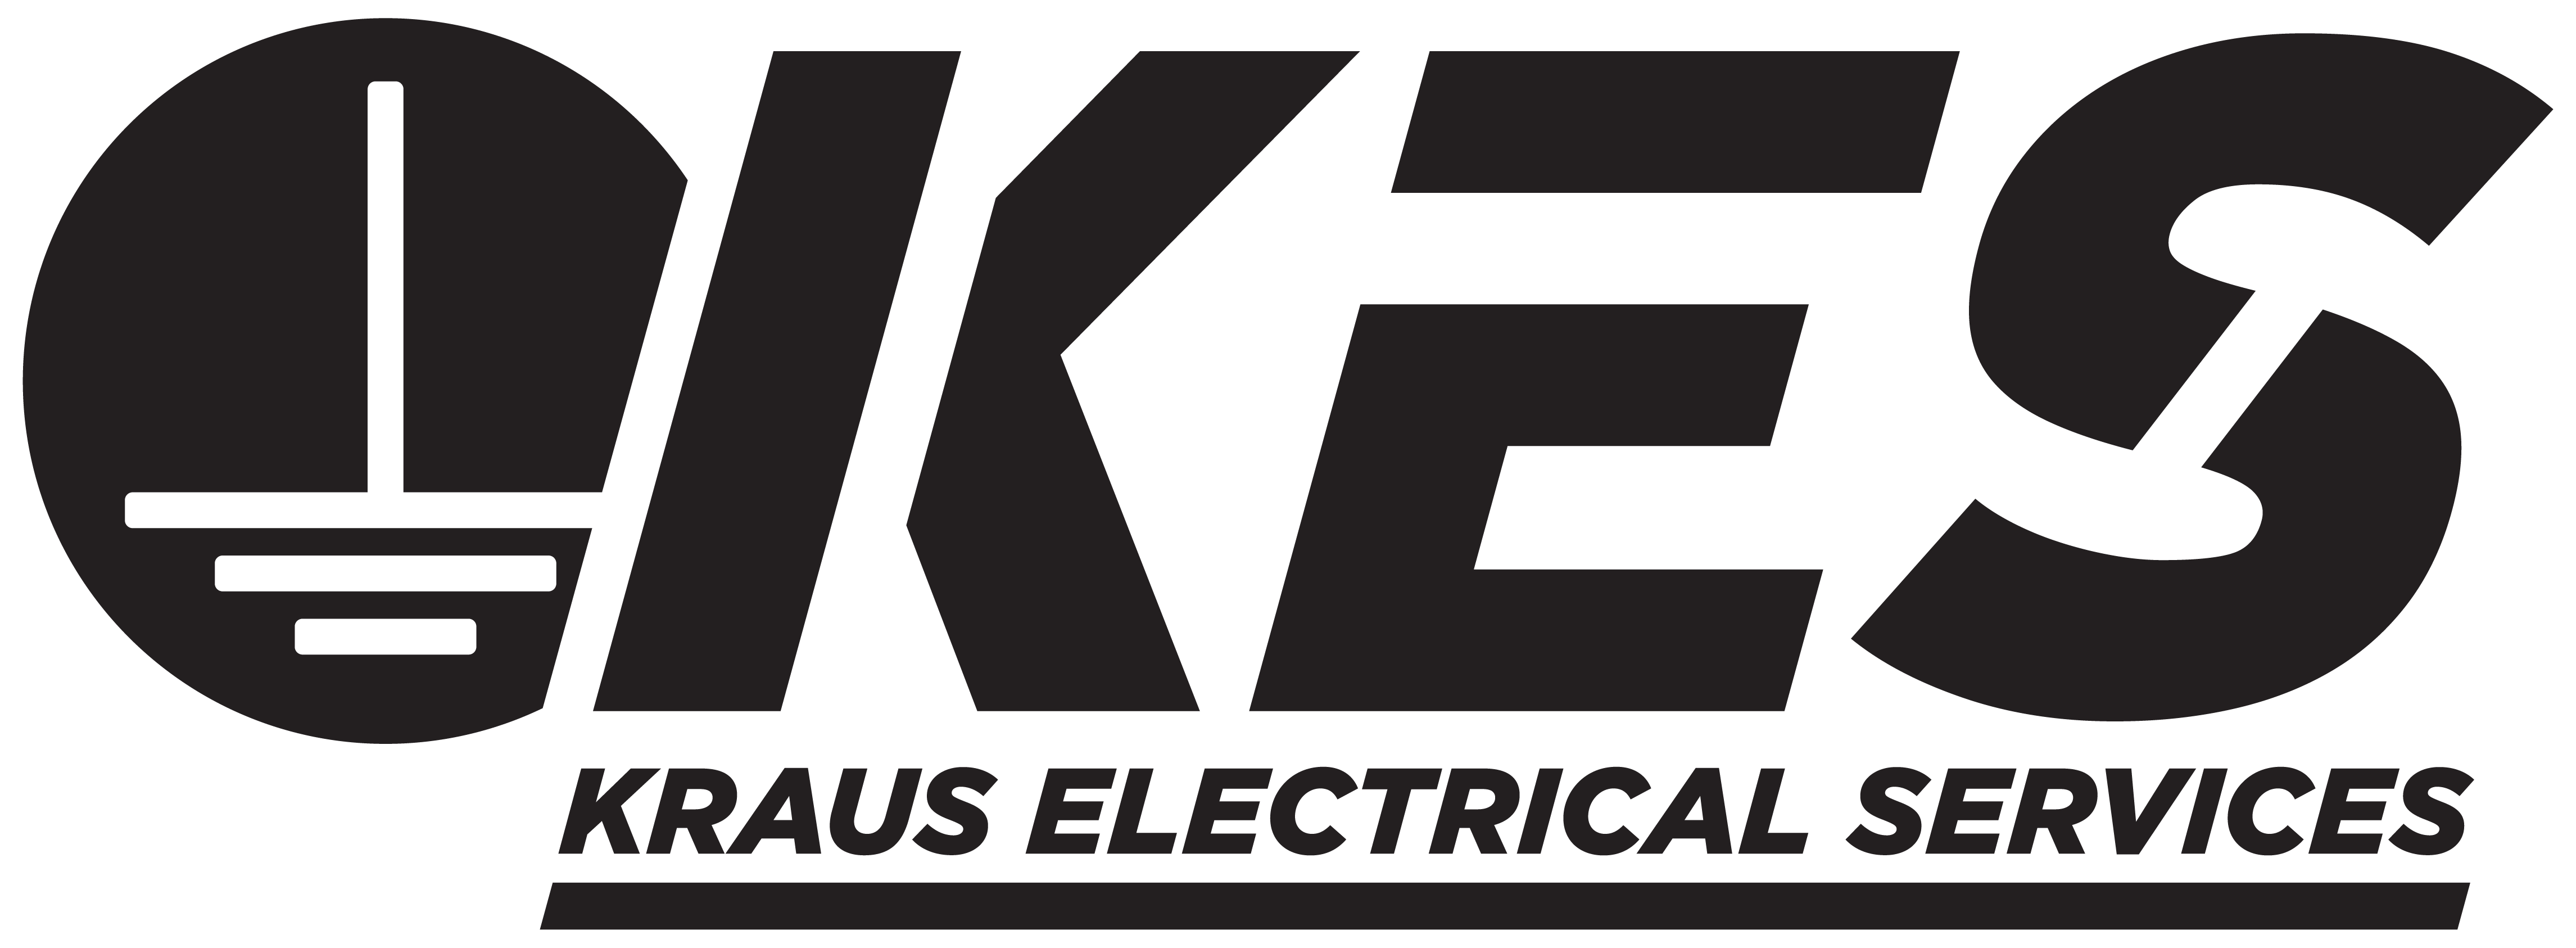 Kraus Electrical Services Logo